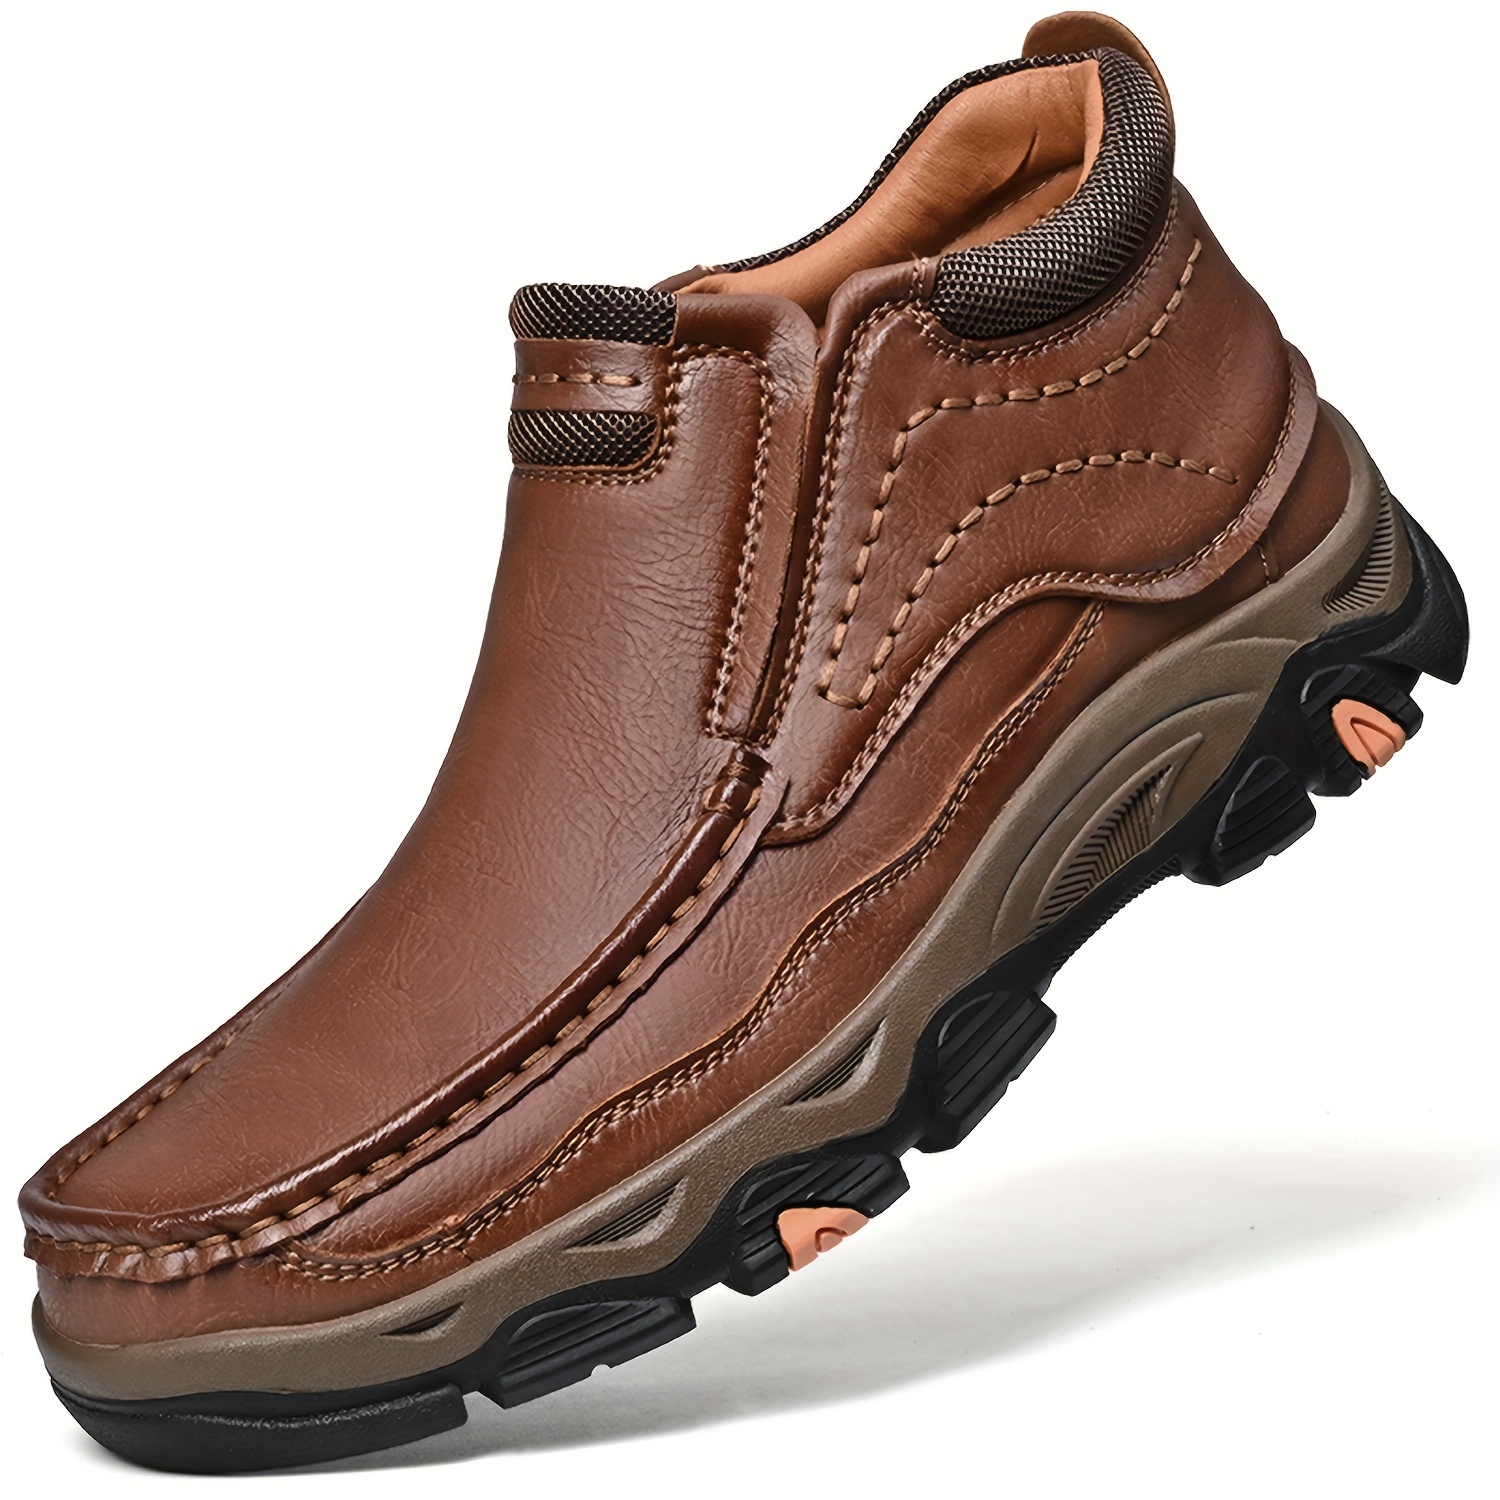 Comprar Zapatos de cuero genuino para hombre, zapatillas impermeables para  exteriores, botas cómodas para hombre, zapatos para caminar y senderismo